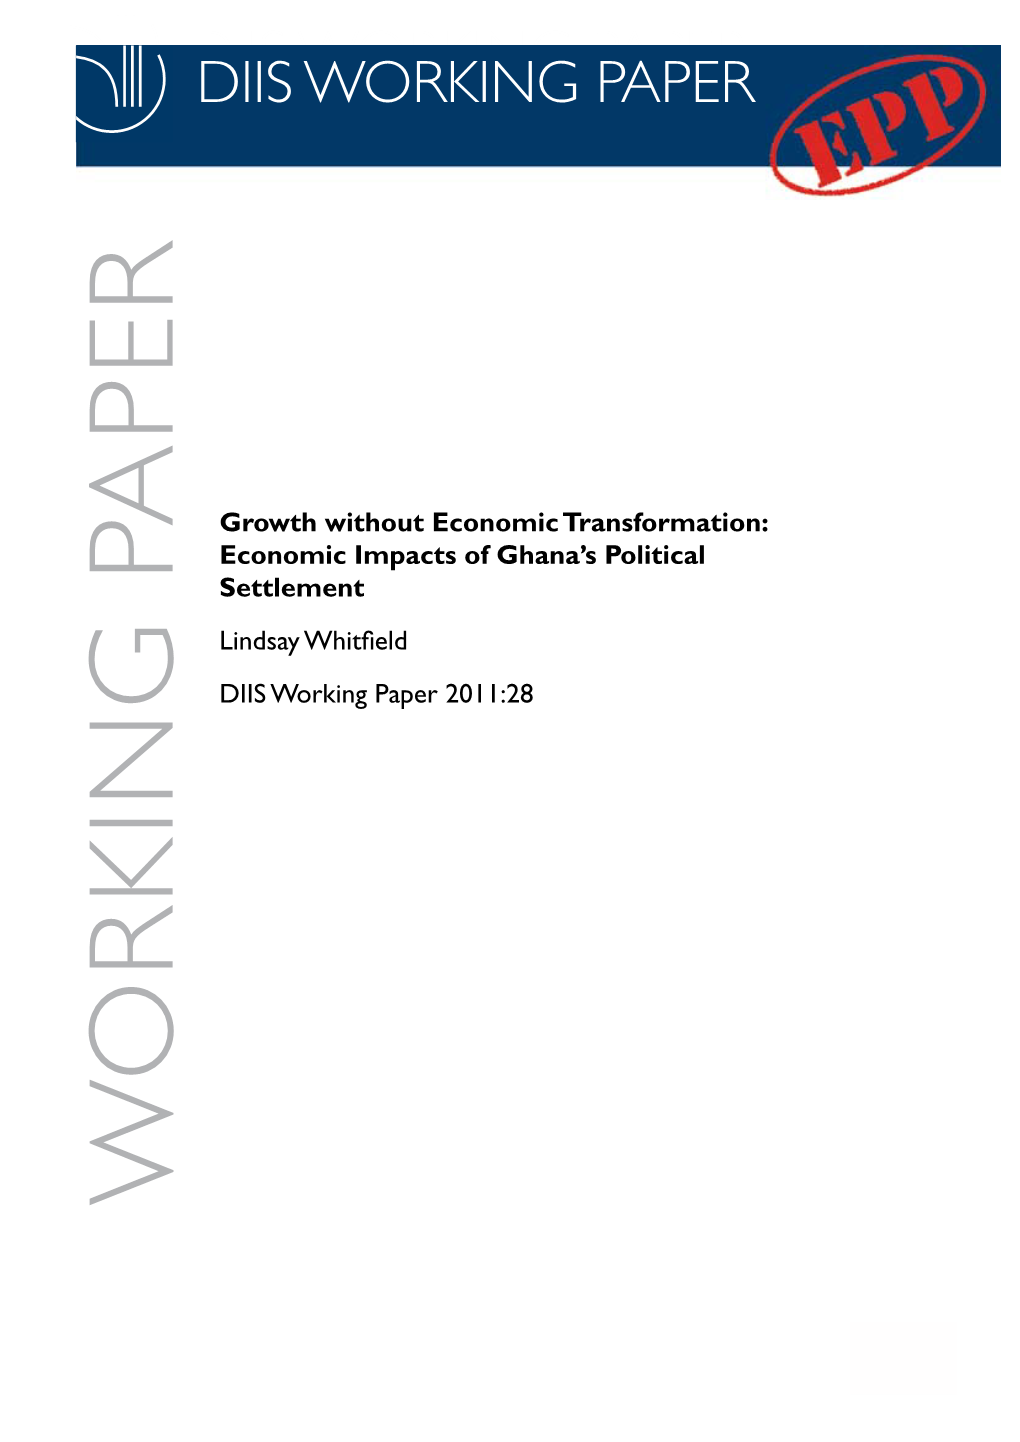 Economic Impacts of Ghana's Political Settlement